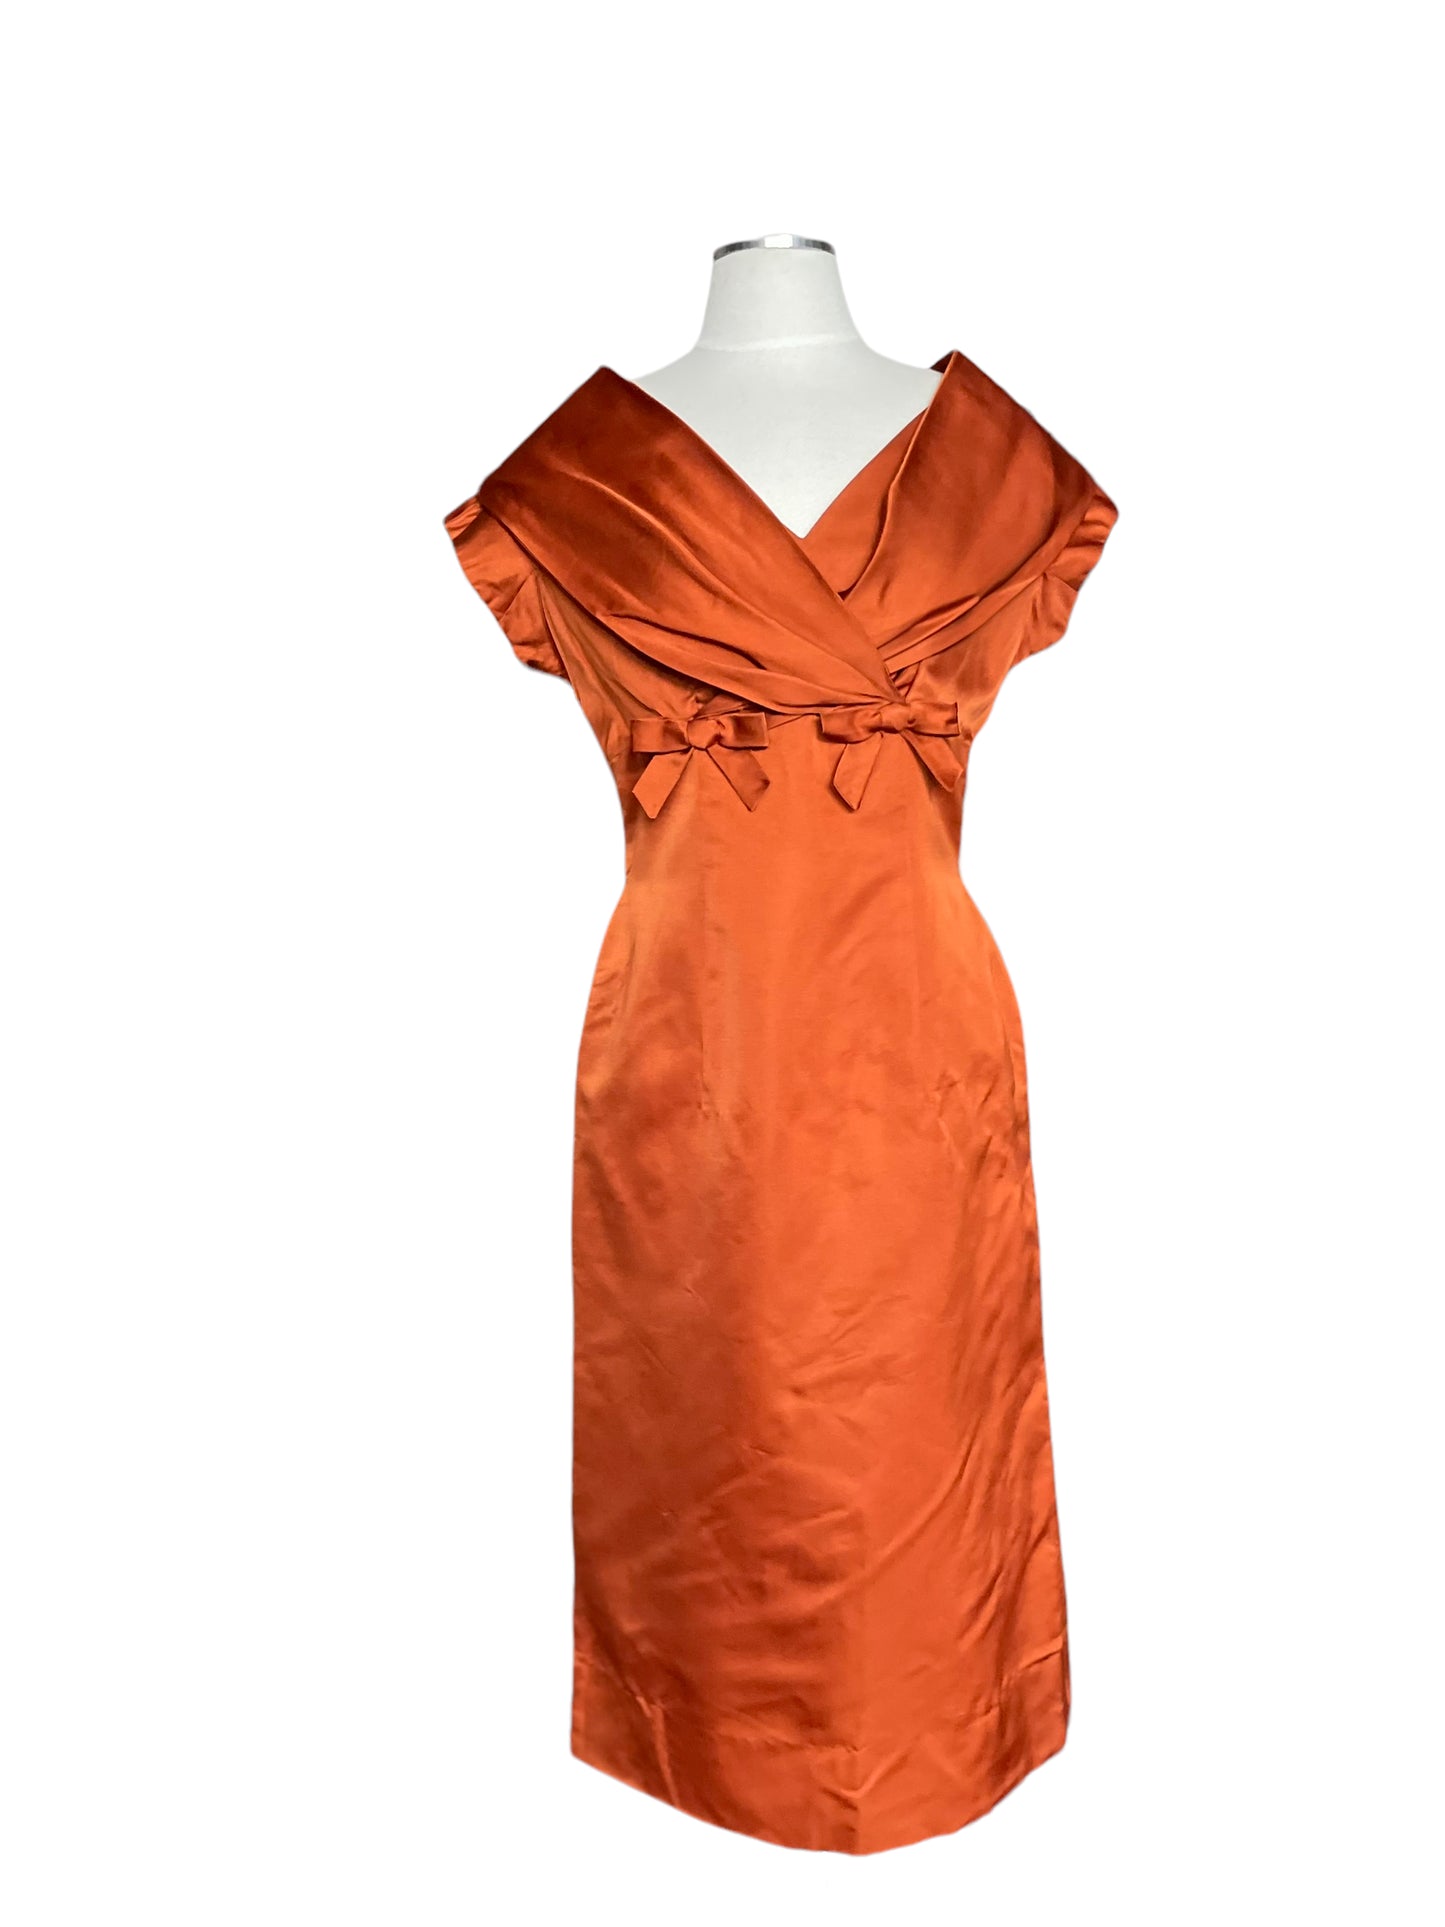 Full front view of Vintage 1950s Burnt Orange Silk Dress SZ M